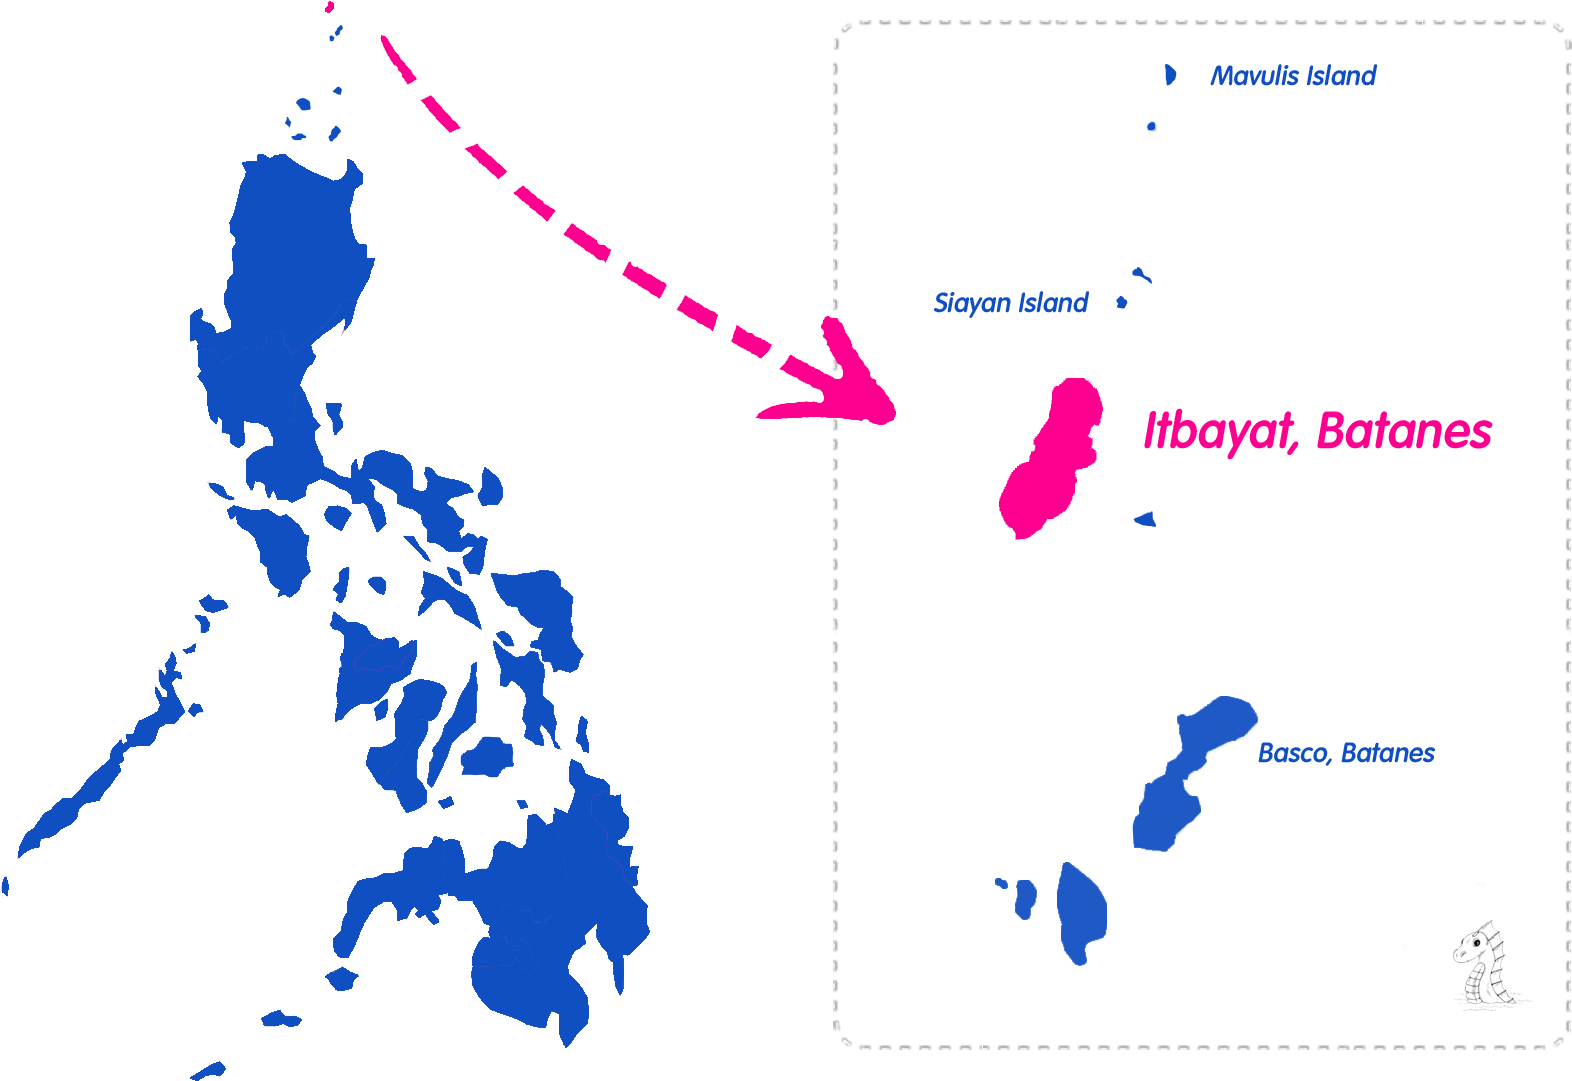 Philippines Map Highlighting Ivoryt Batanes